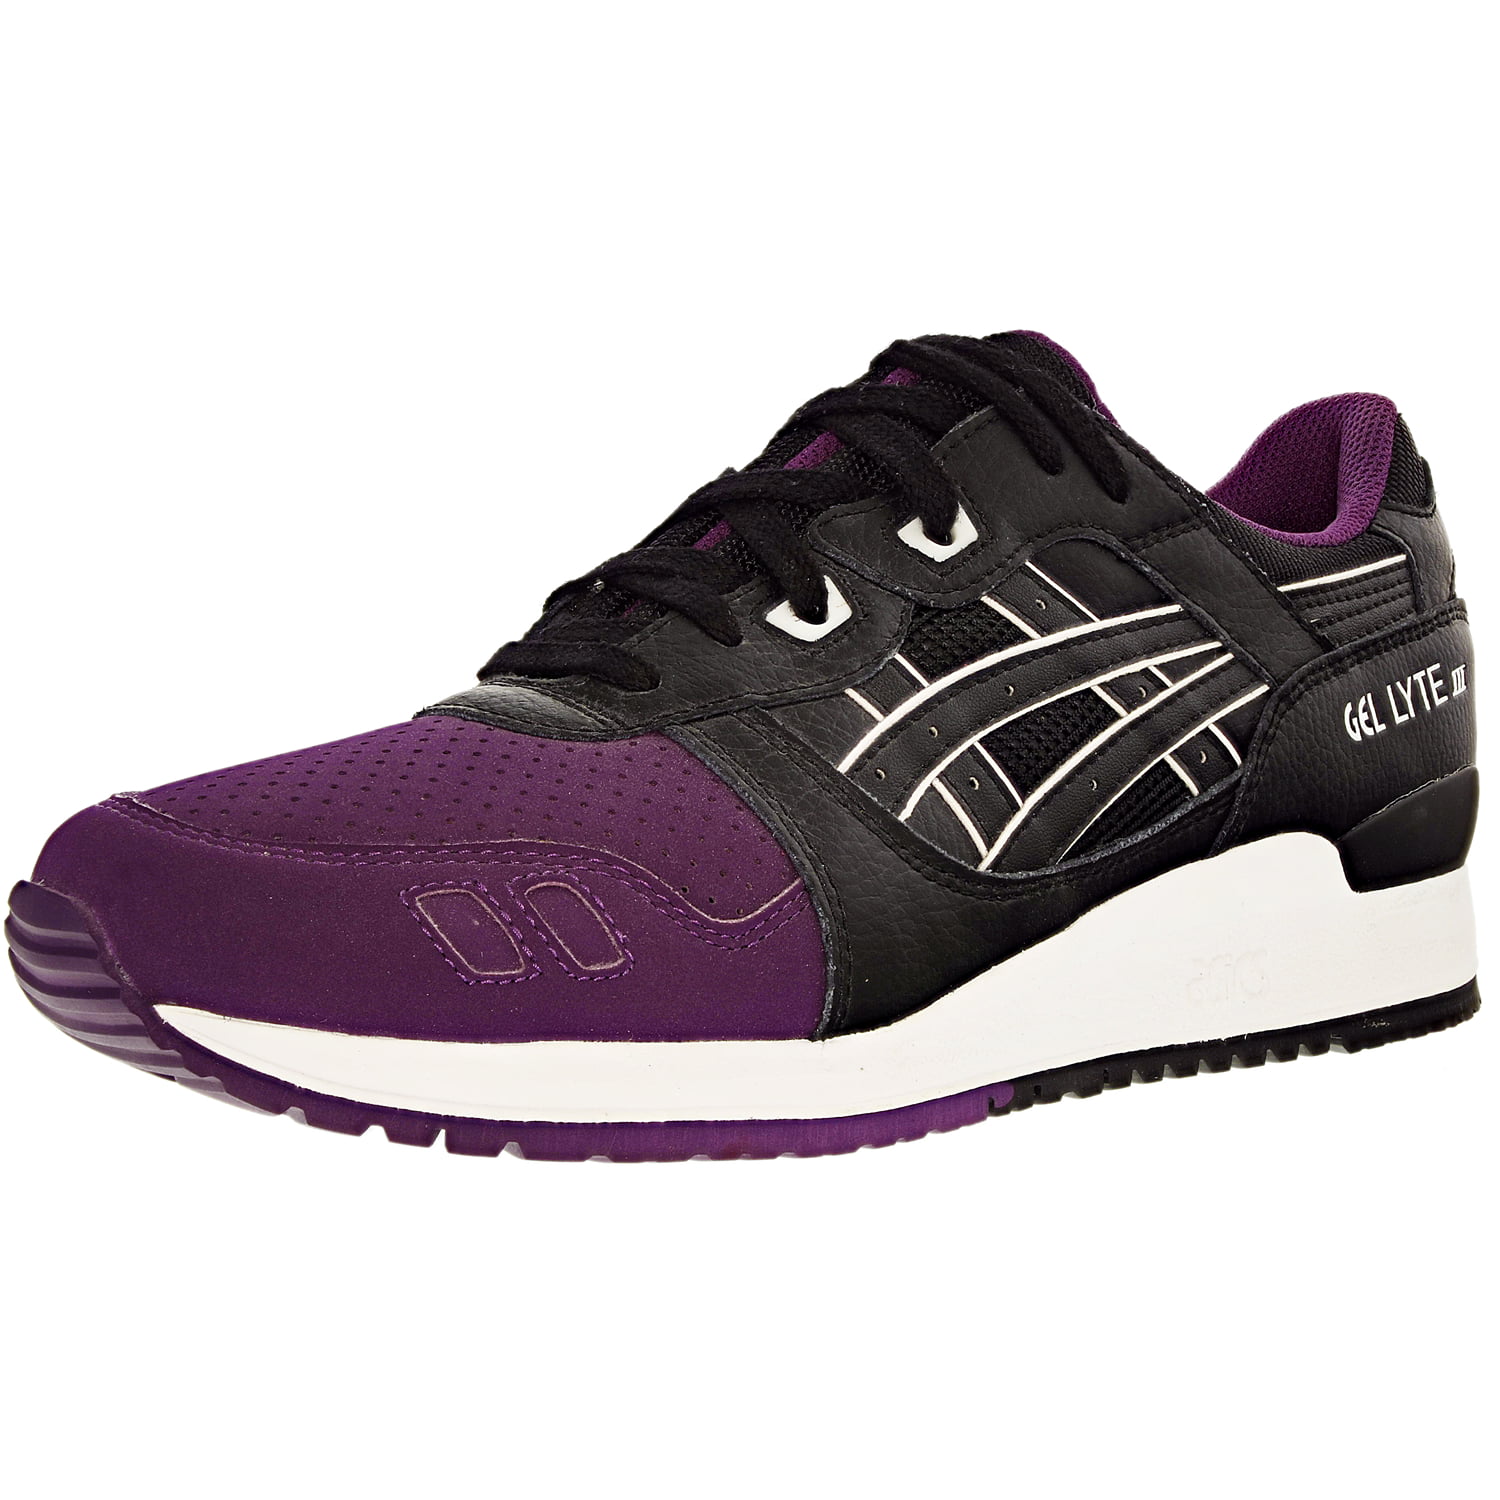 lucha mundo Desalentar Asics Men's Gel-Lyte Iii Purple/Black Ankle-High Leather Running Shoe -  9.5M - Walmart.com